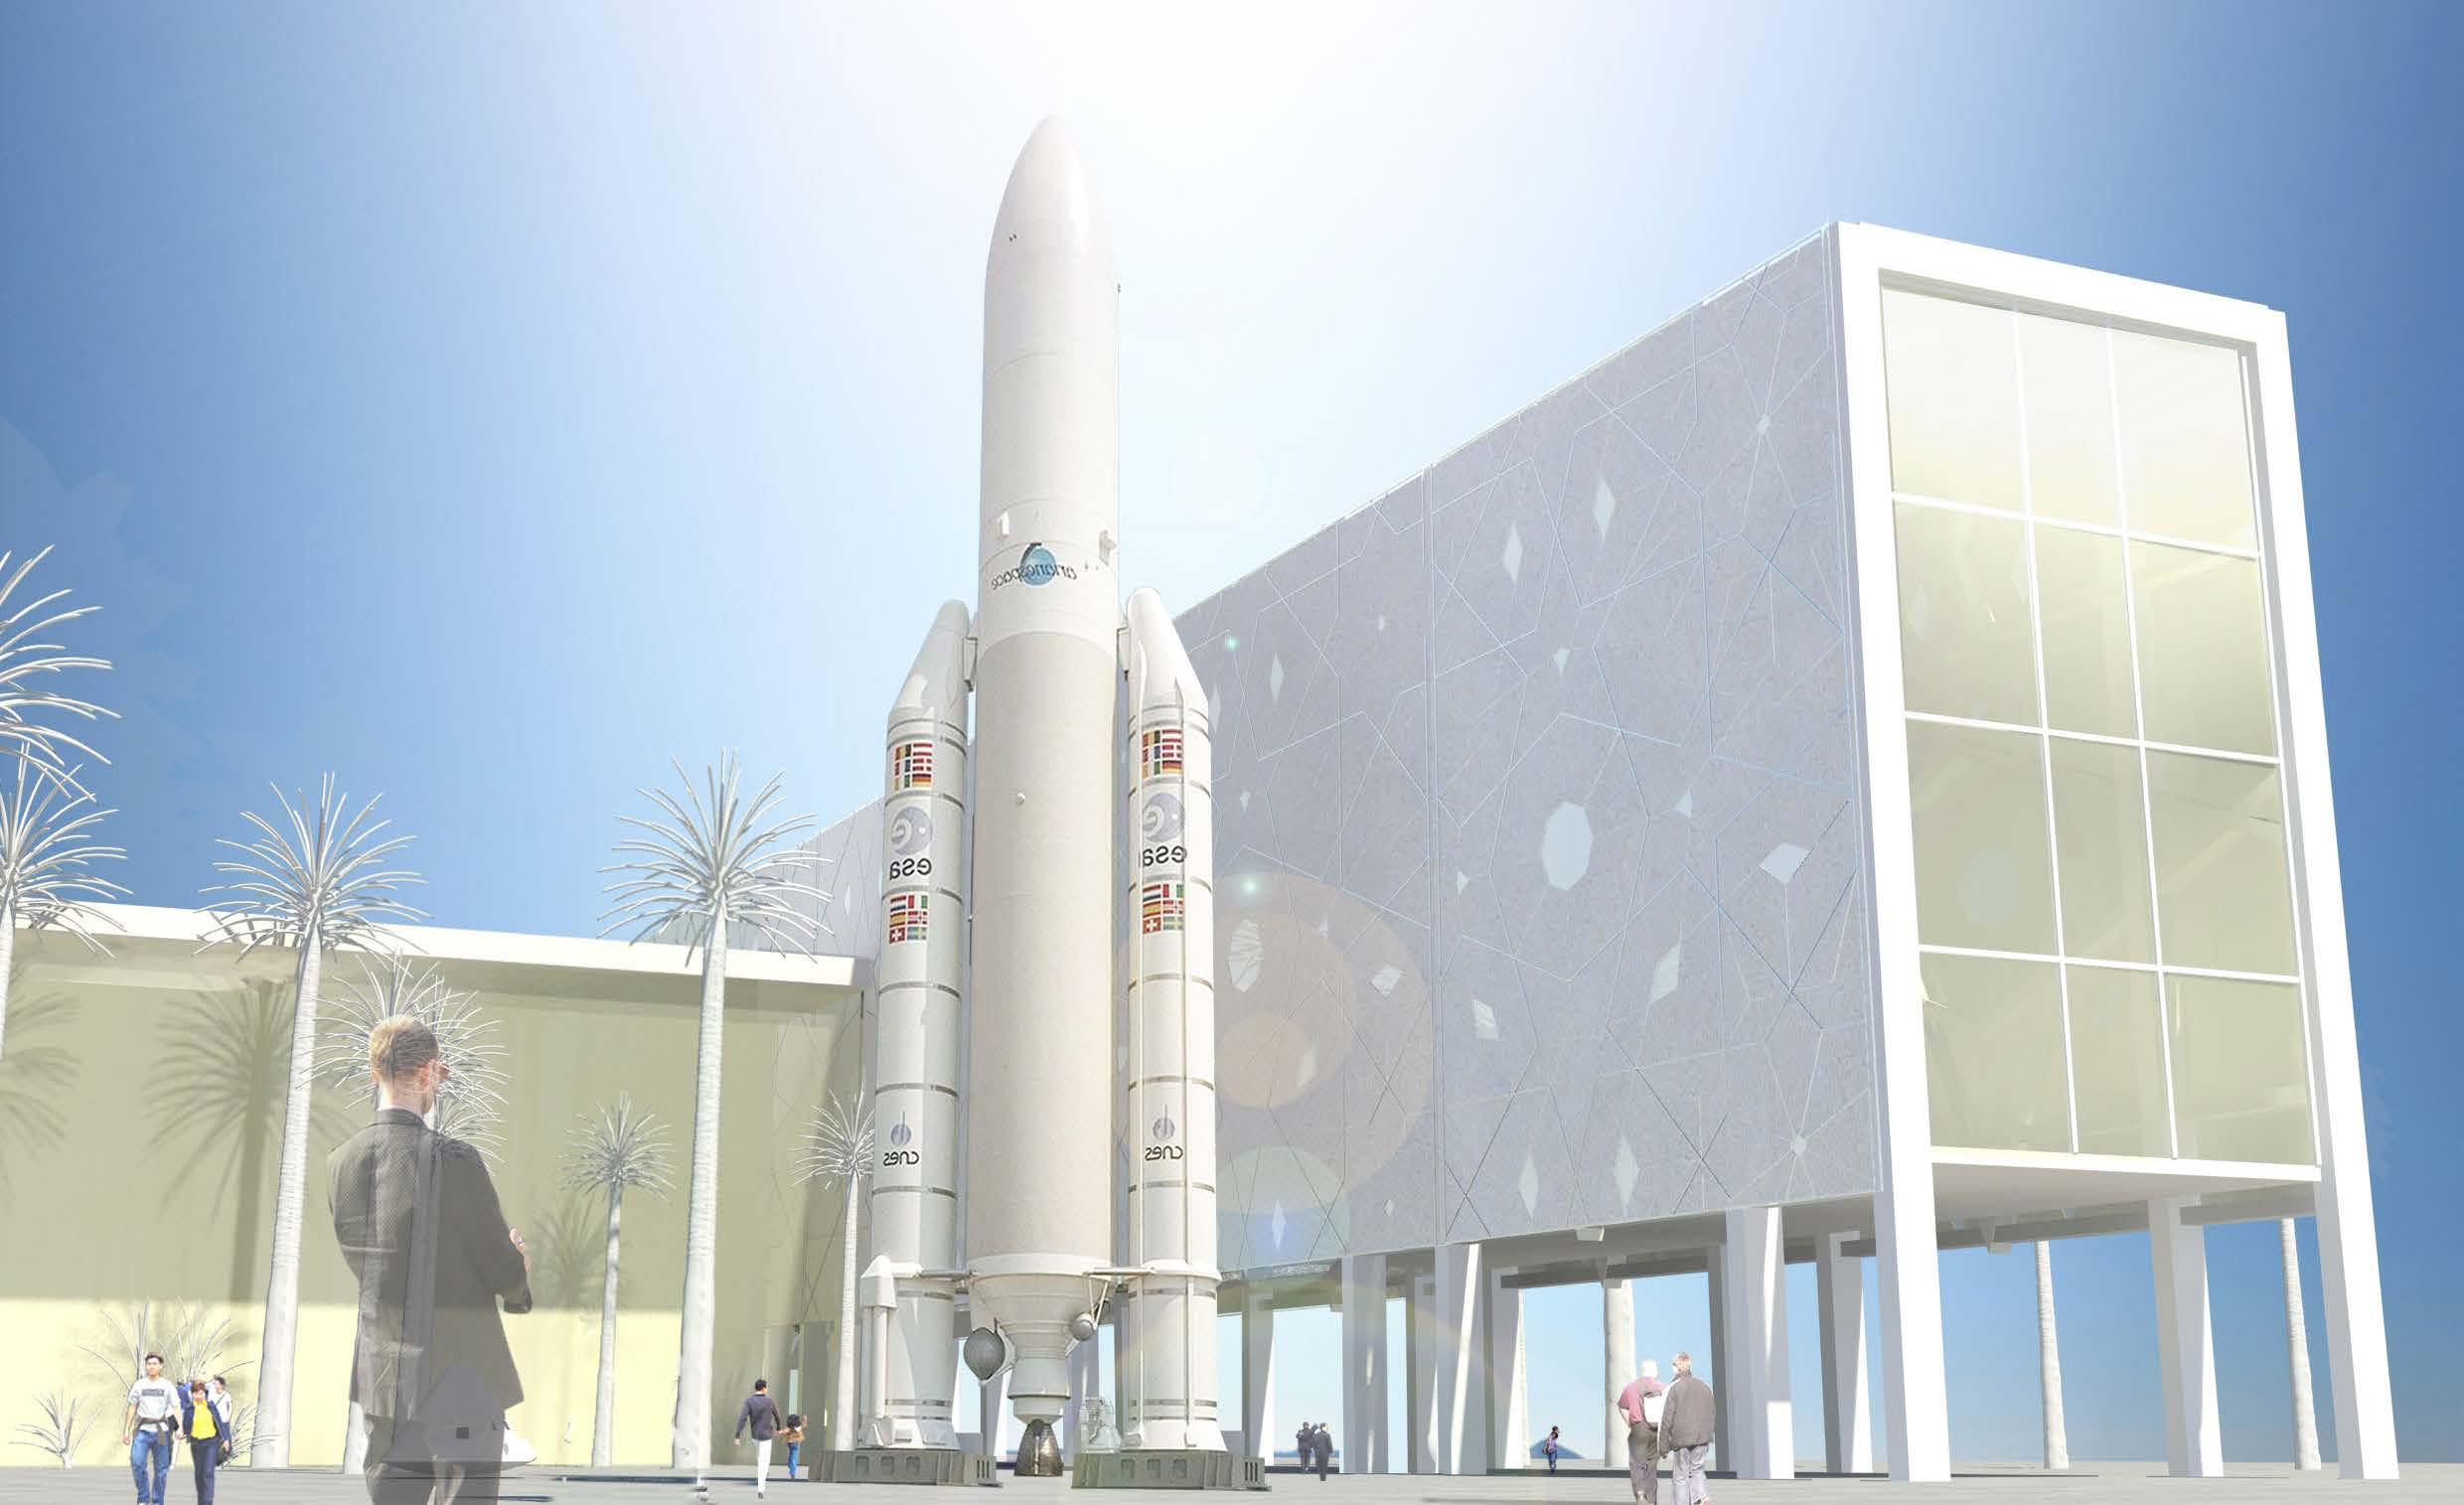 82' High Ariane V Launch Vehicle